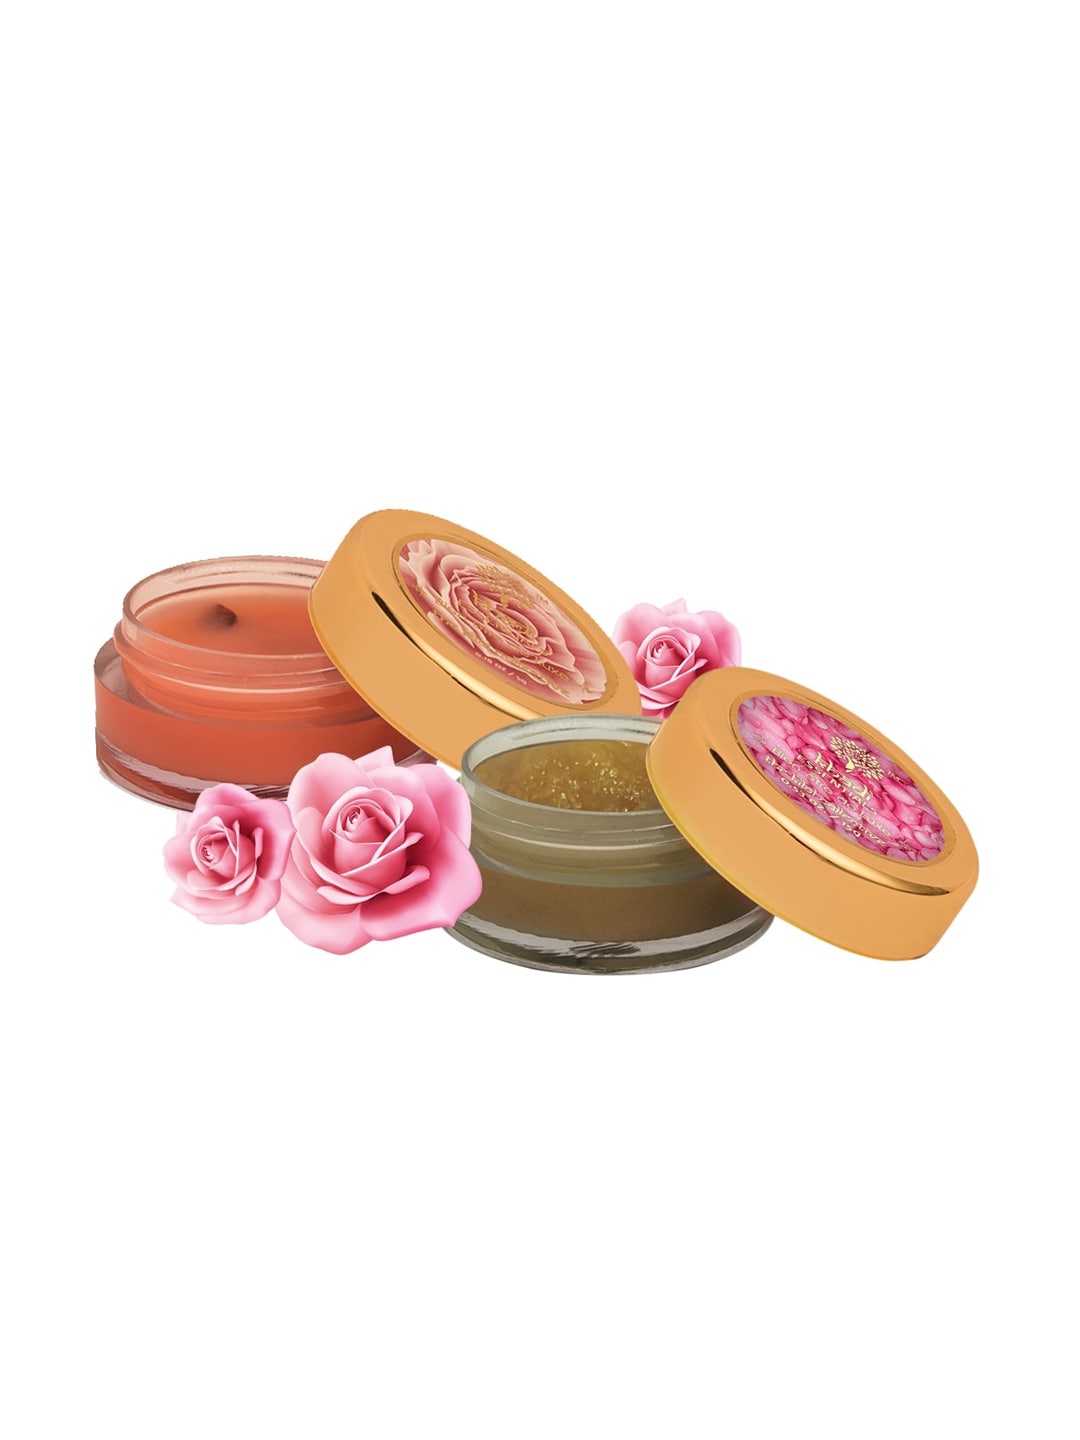 KHADI ESSENTIALS Set Wild Rose Lip Butter & Rose Petal & Dates Lip Scrub 20 gm Price in India